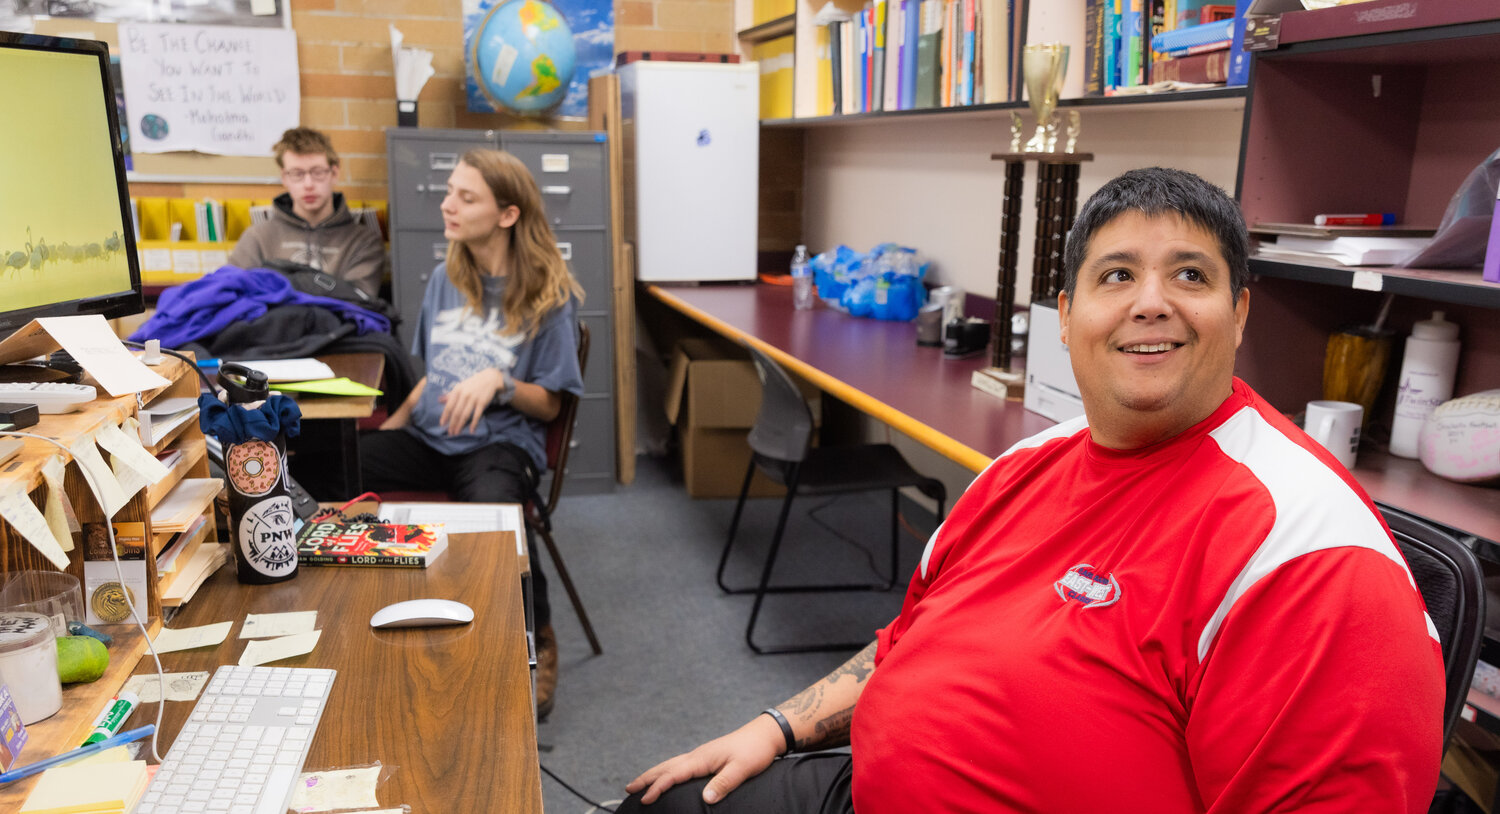 Mazen Saade, a history teacher, smiles while educating students at Onalaska High School on Tuesday, Nov. 28.